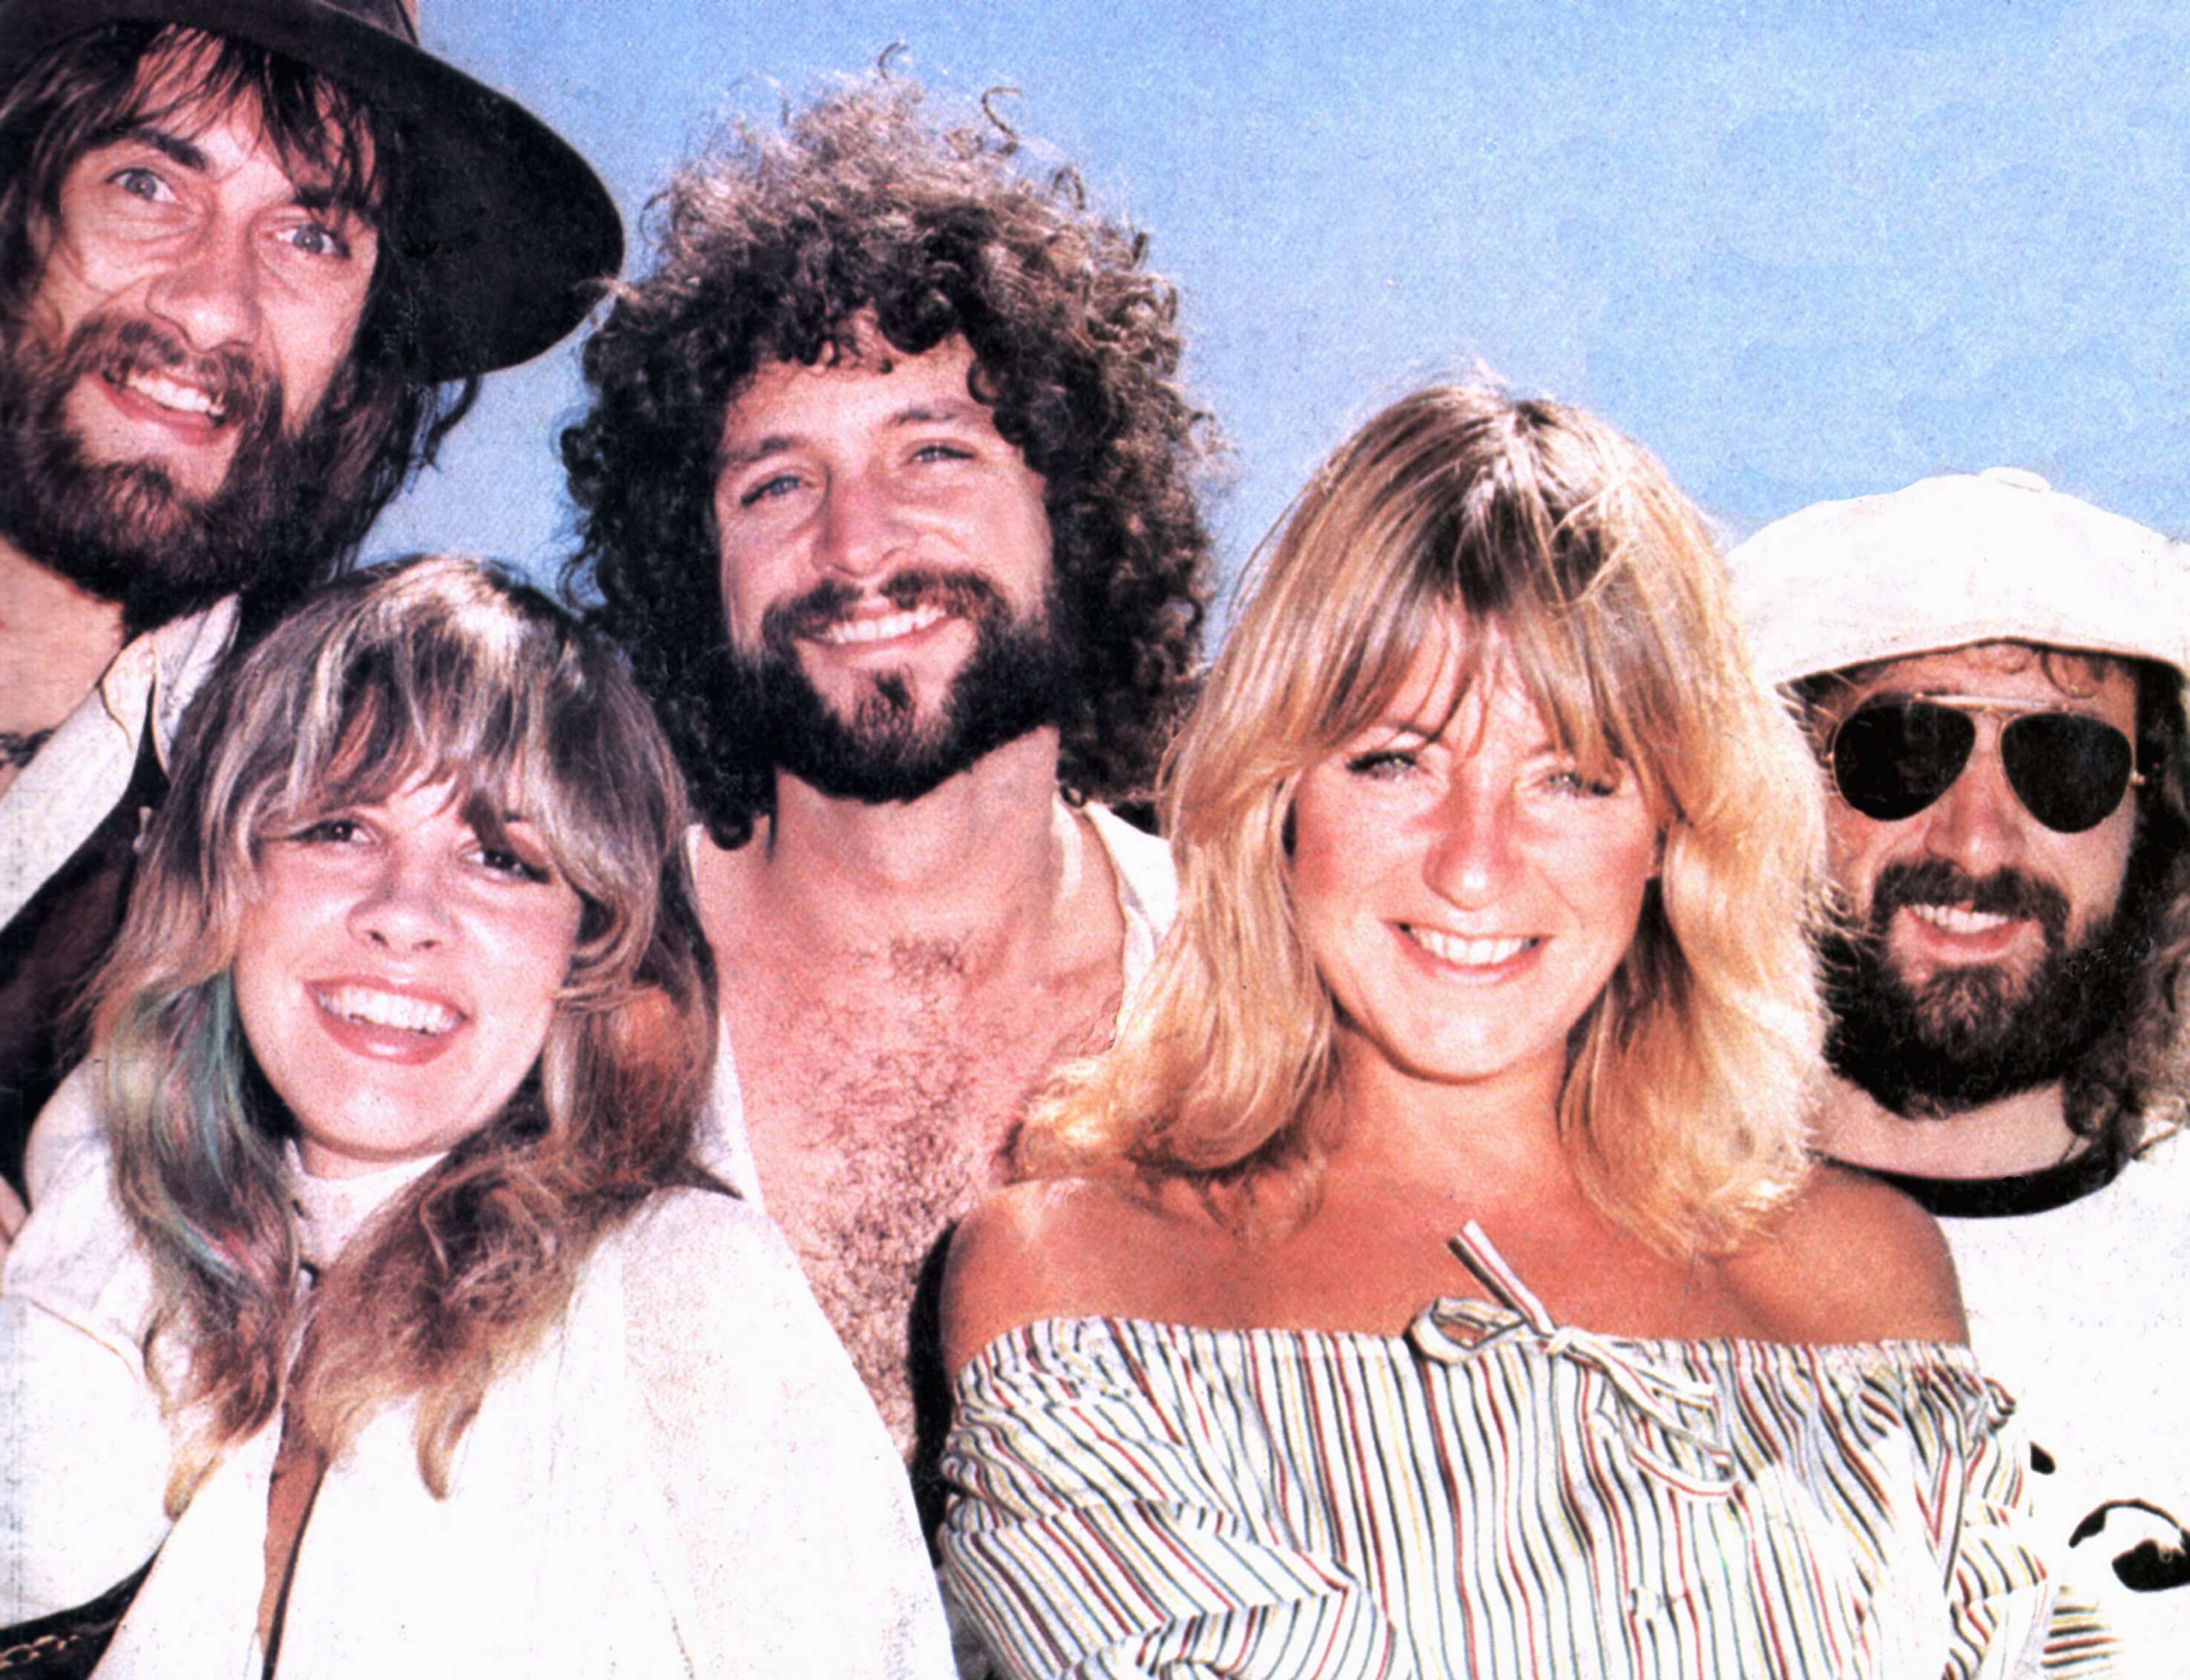 Mick Fleetwood, Stevie Nicks, Lindsey Buckingham, Christine McVie, and John McVie of Fleetwood Mac pose together against a blue background. 